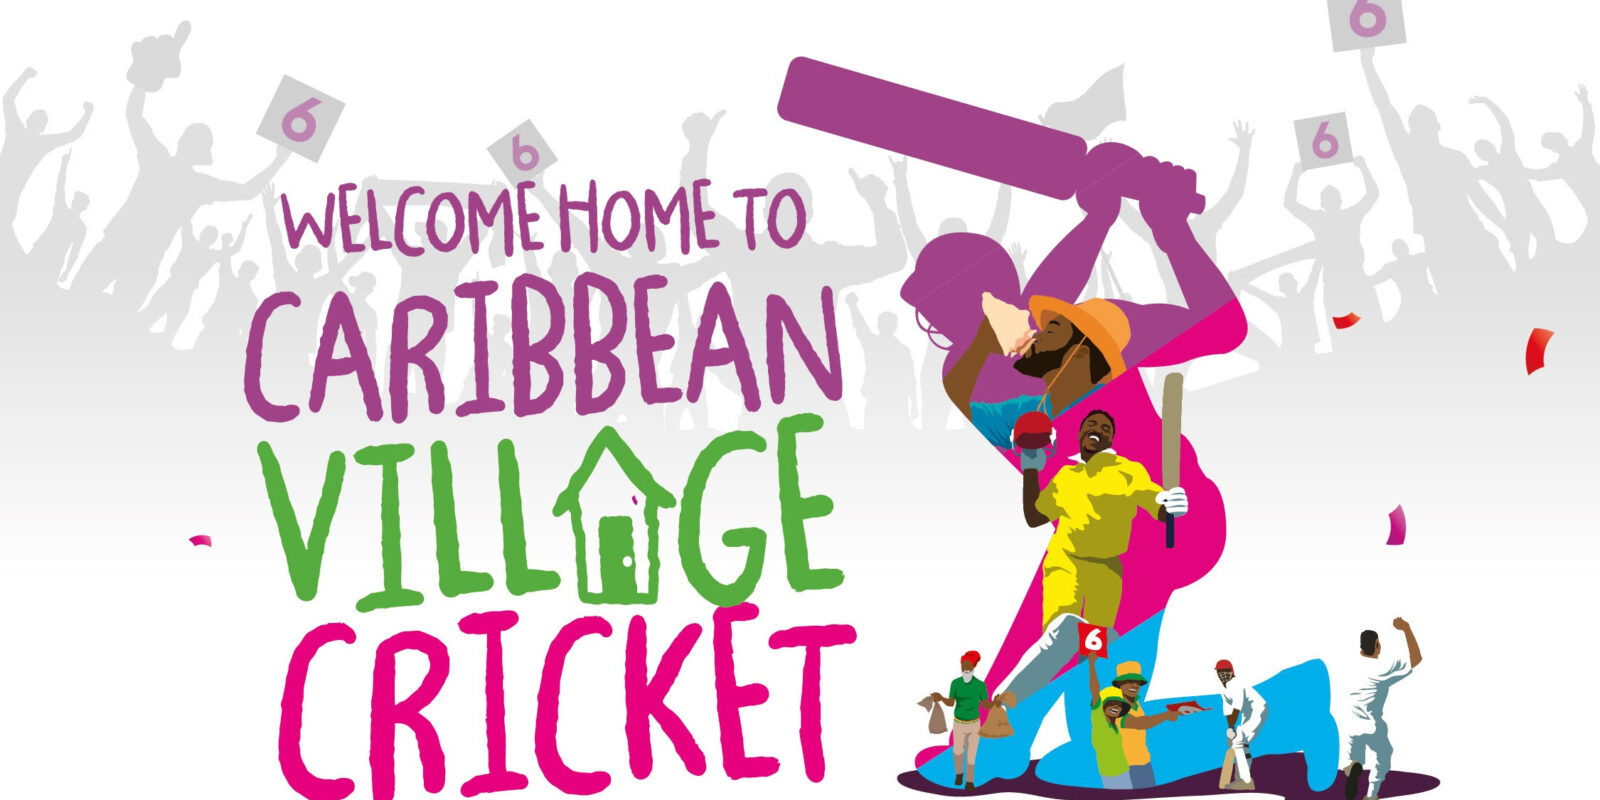 Caribbean Airlines Launches Caribbean Village Cricket Program